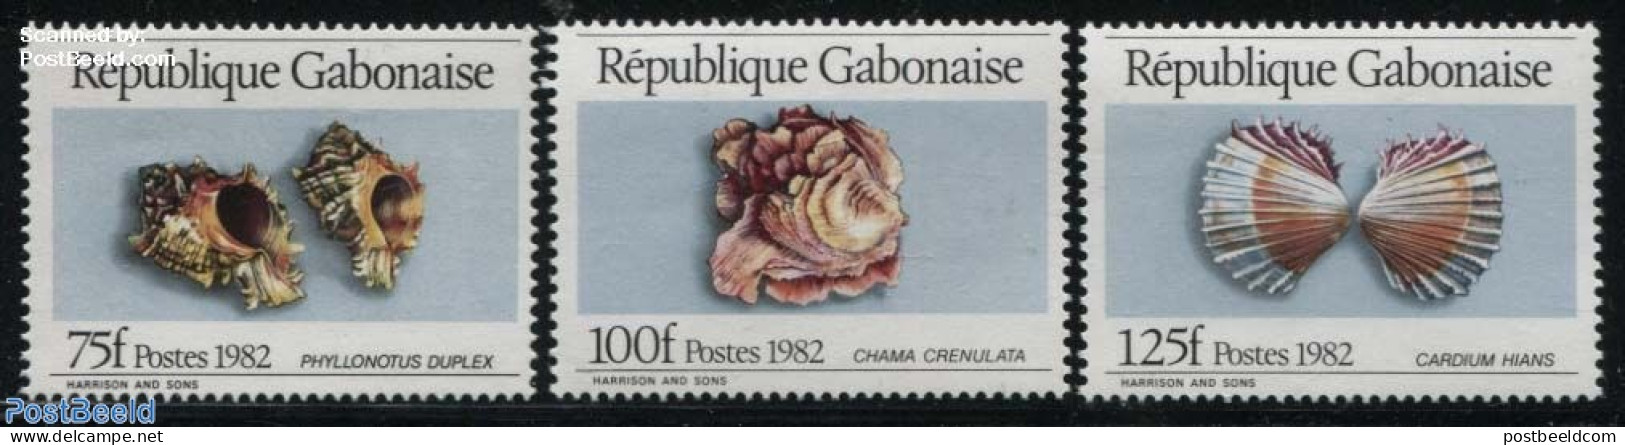 Gabon 1982 Moluscs 3v, Mint NH, Nature - Shells & Crustaceans - Unused Stamps